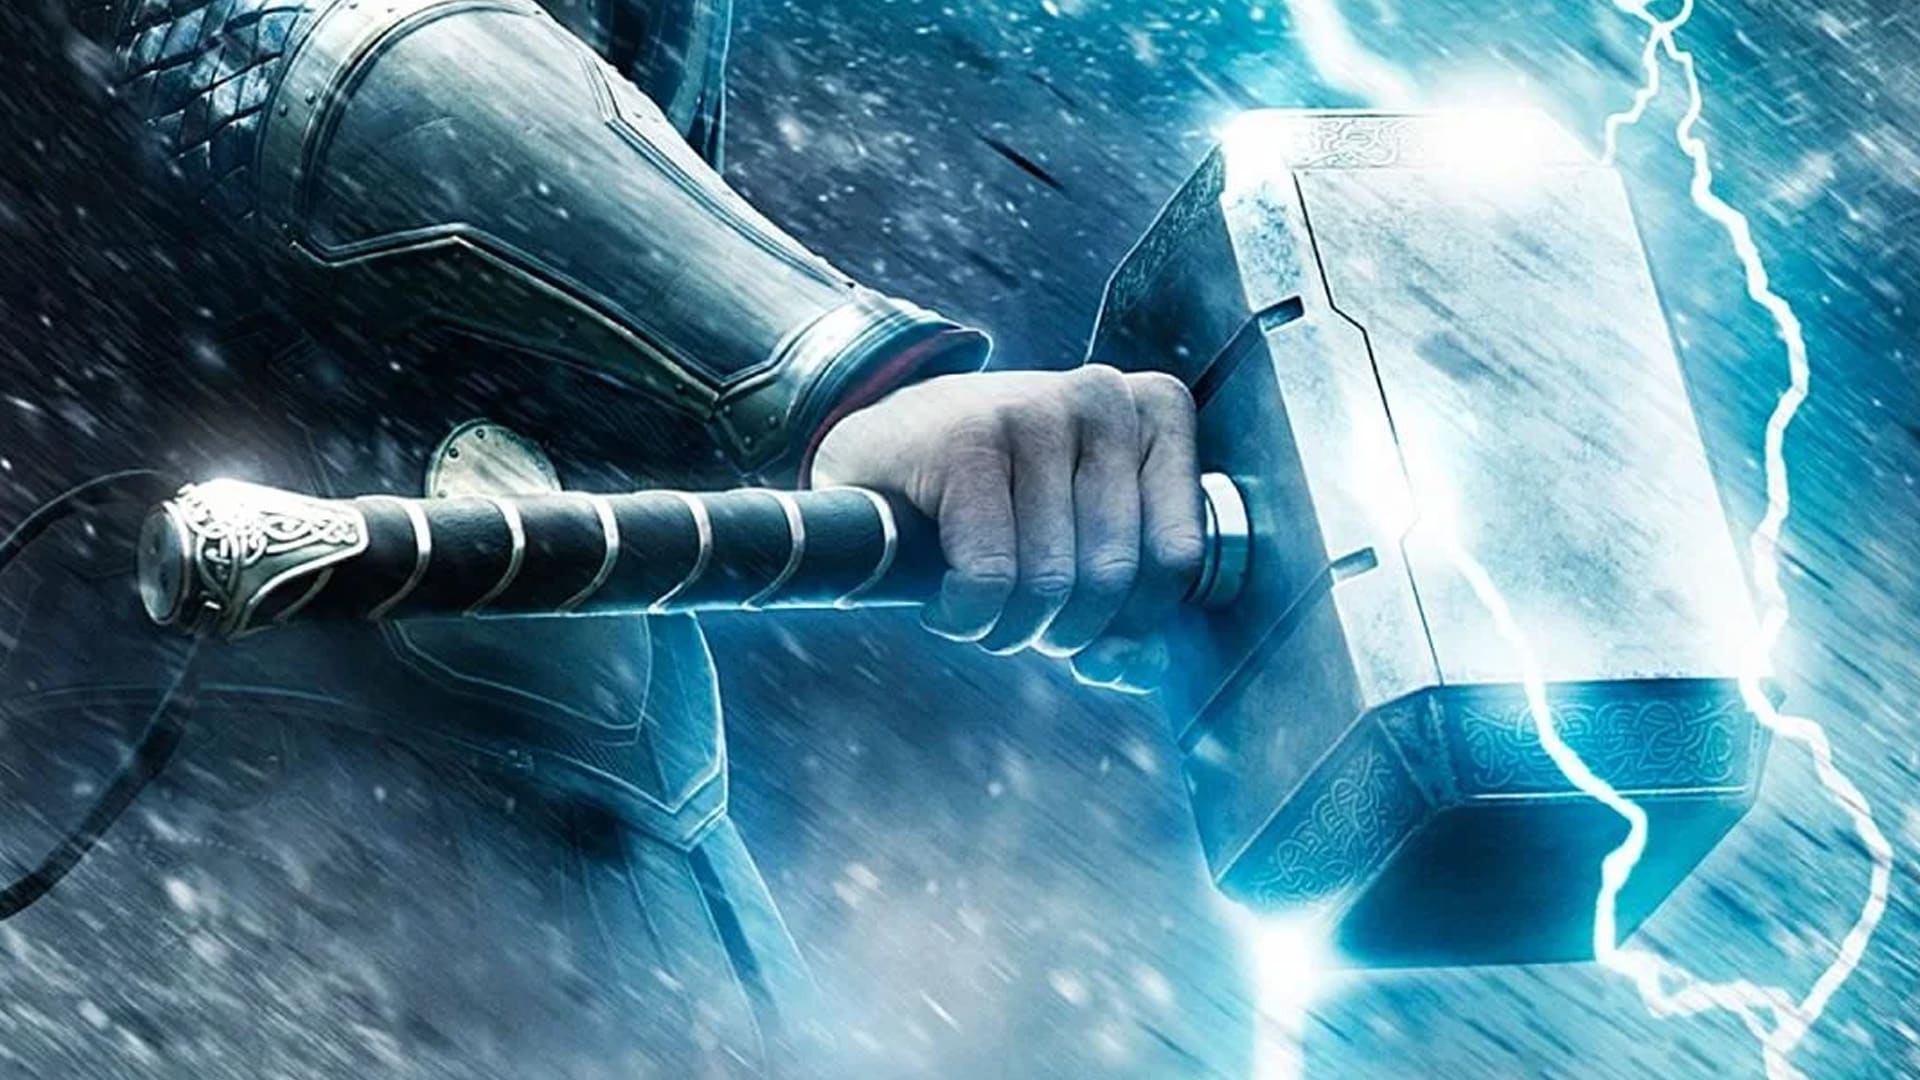 Thorovo kladivo ve své komiksové podobě